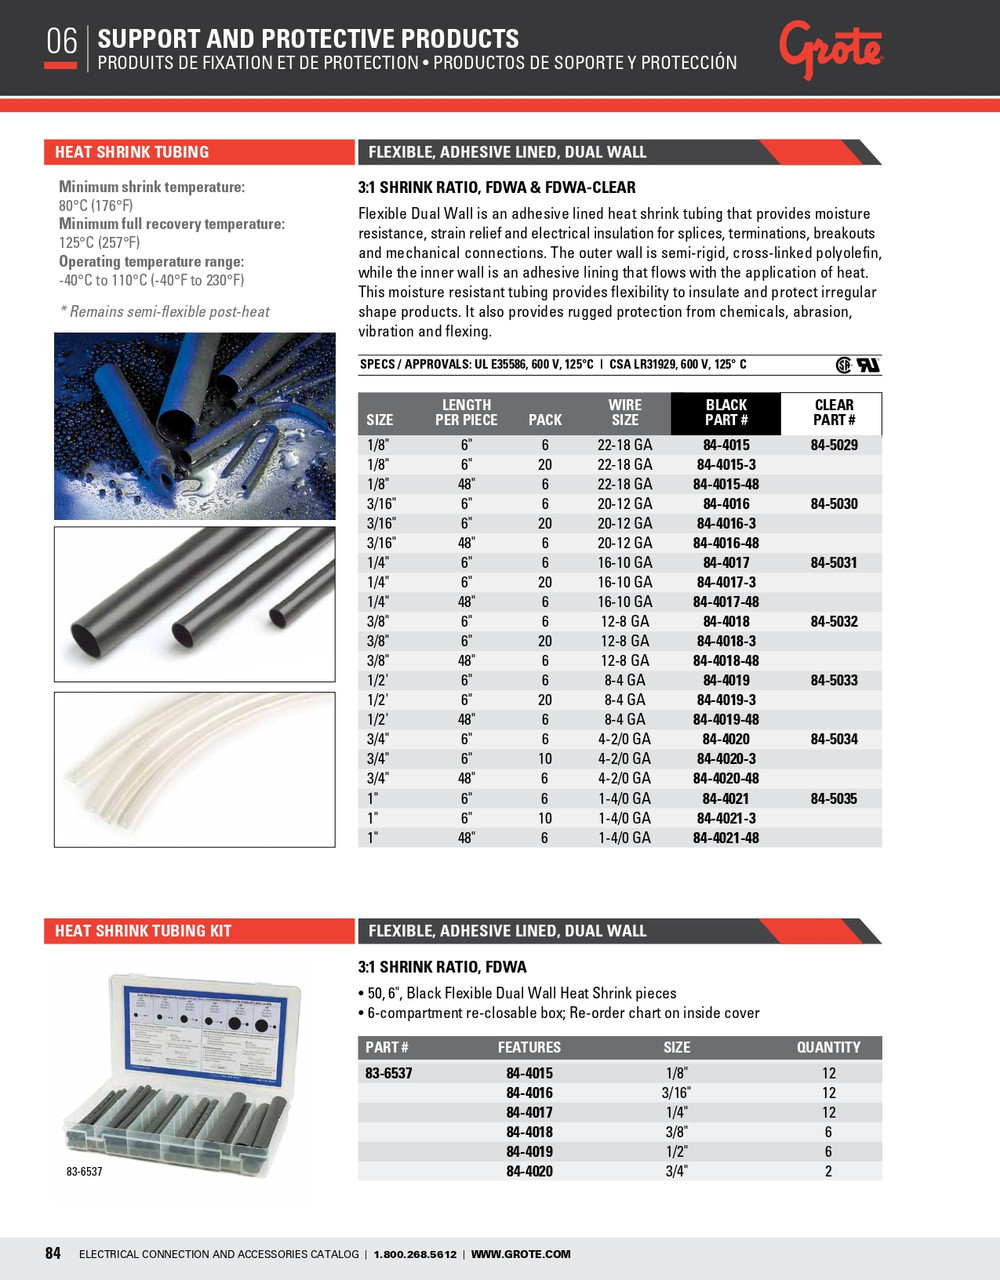 1" Dual Wall 3:1 Flexible Adhesive Lined Heat Shrink Tubing 6" @ 10 Pack - Black  84-4021-3